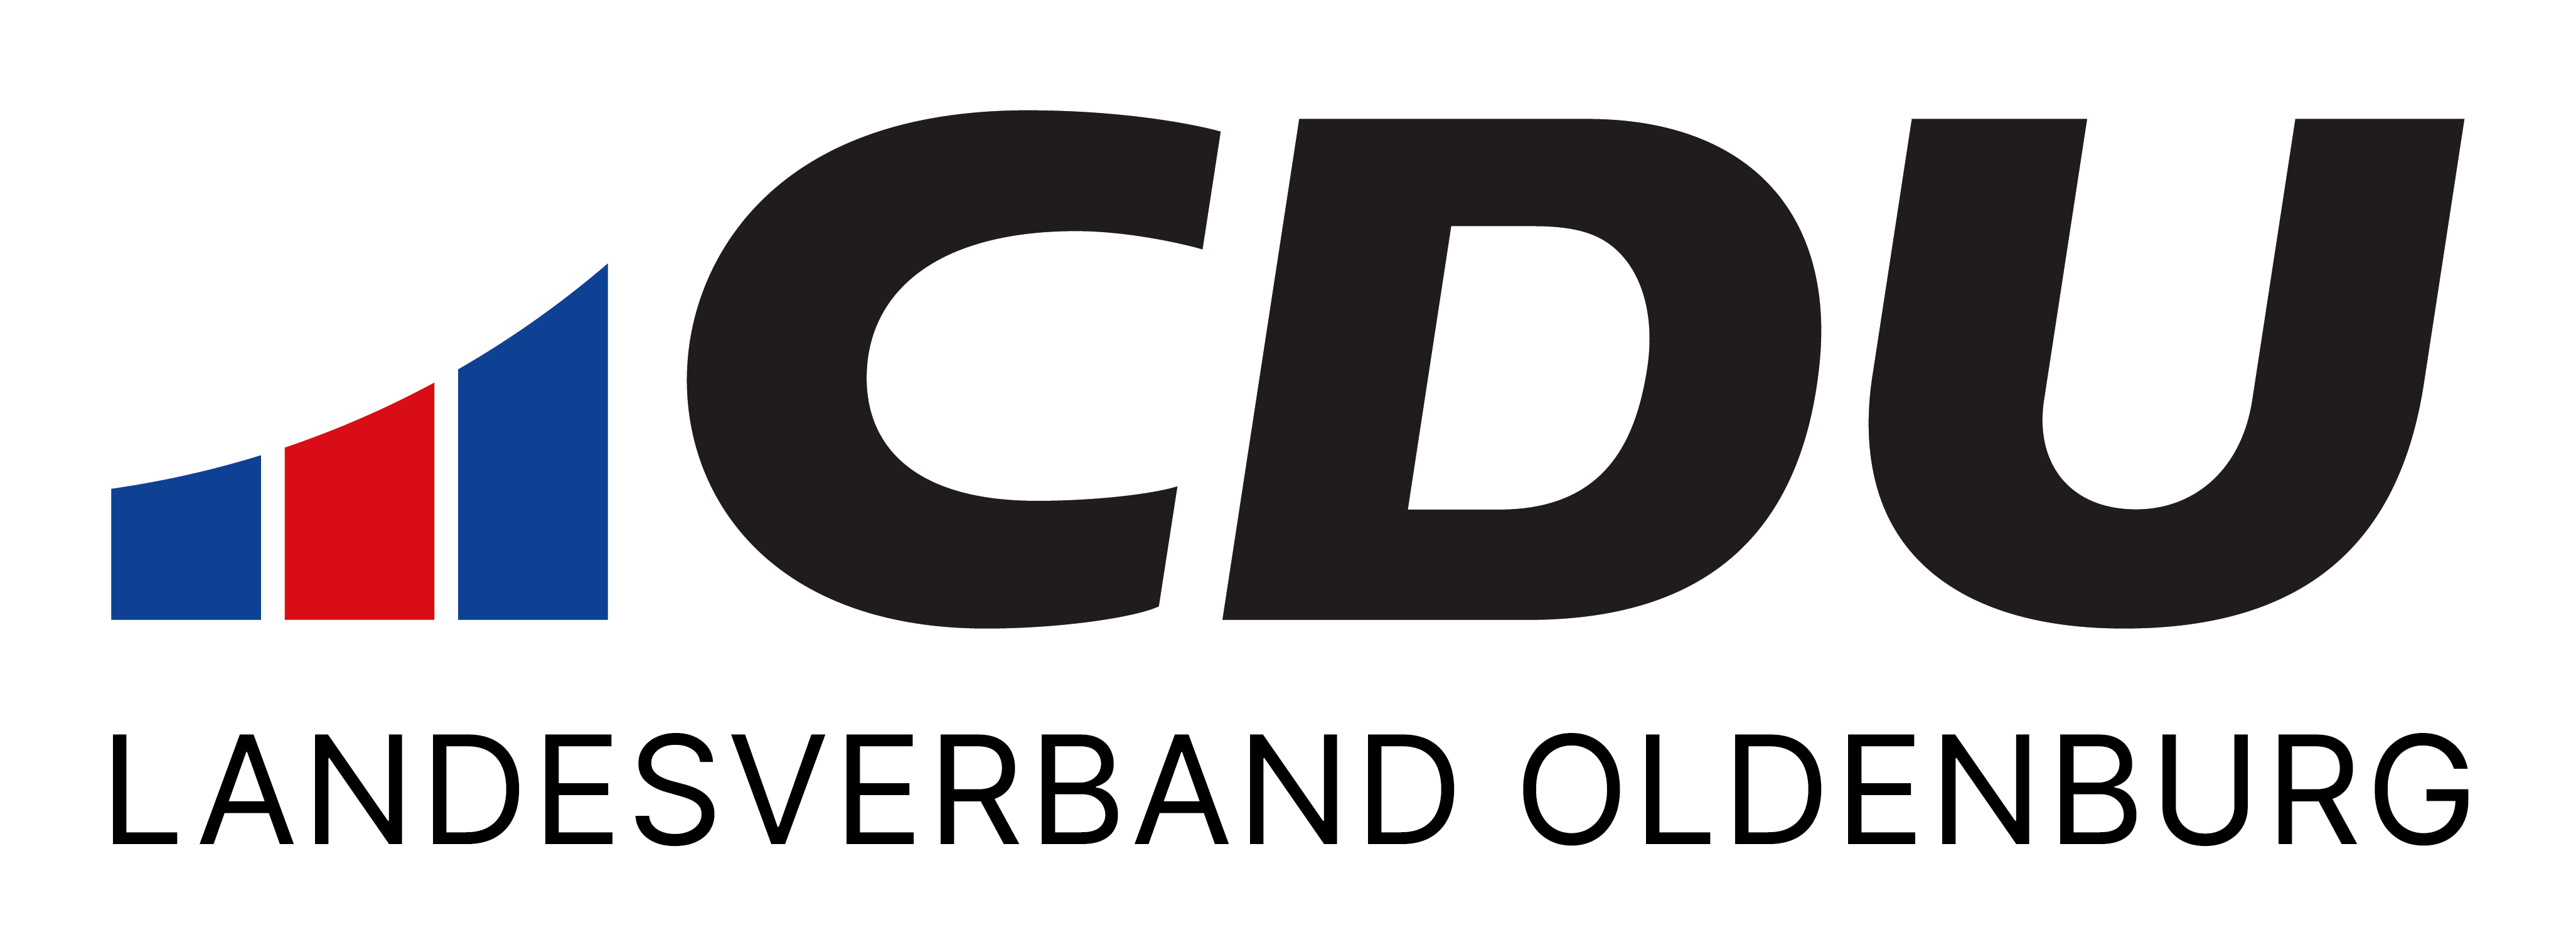 CDU Landesverband Oldenburg